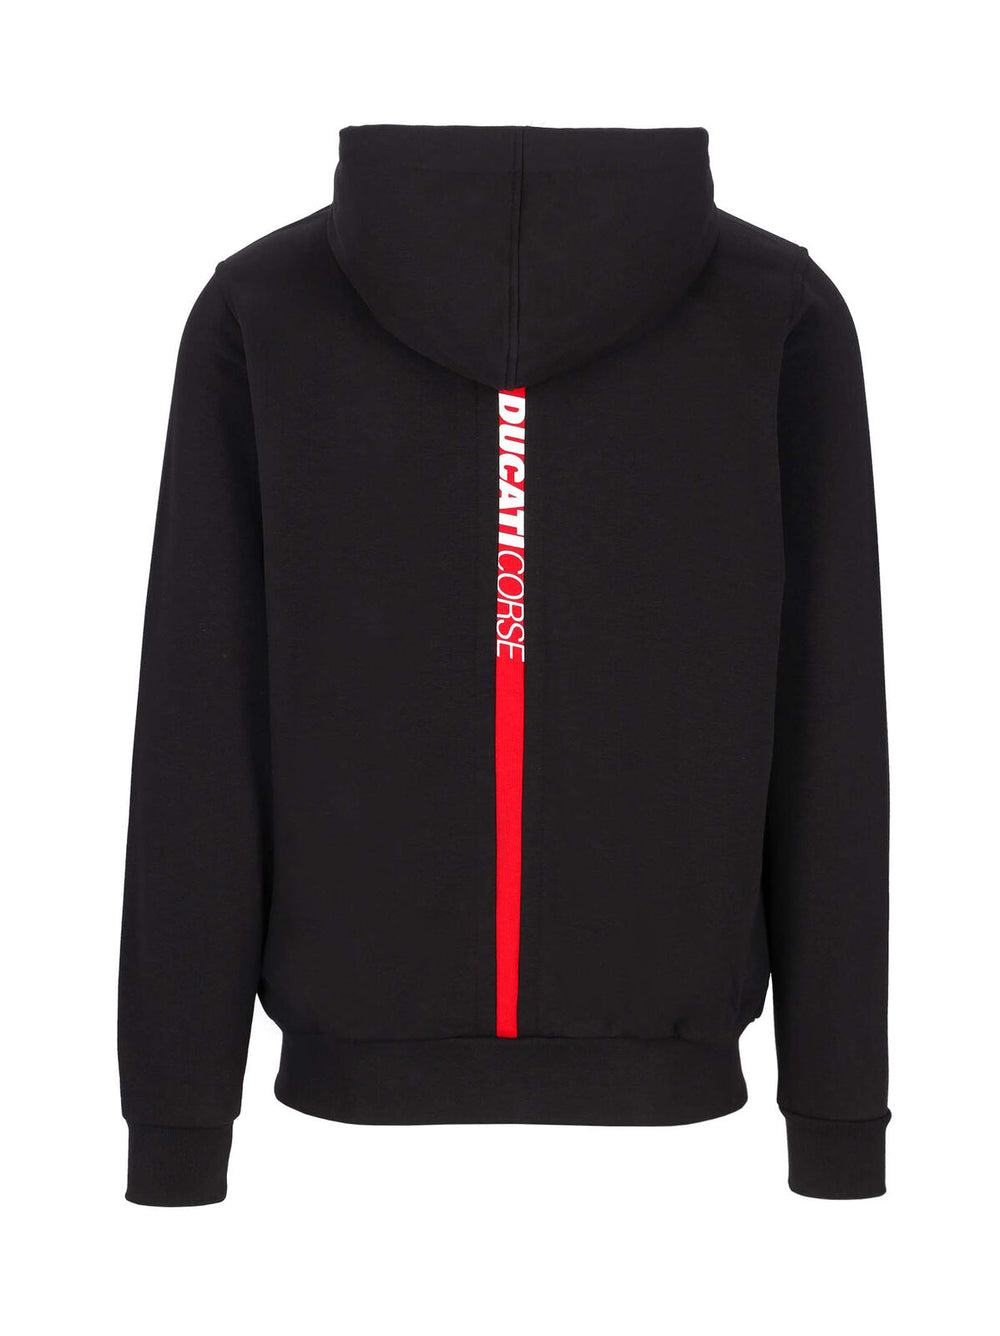 Ducati Corse MotoGP Full Zip Logo Hooded Sweatshirt - Men - Black